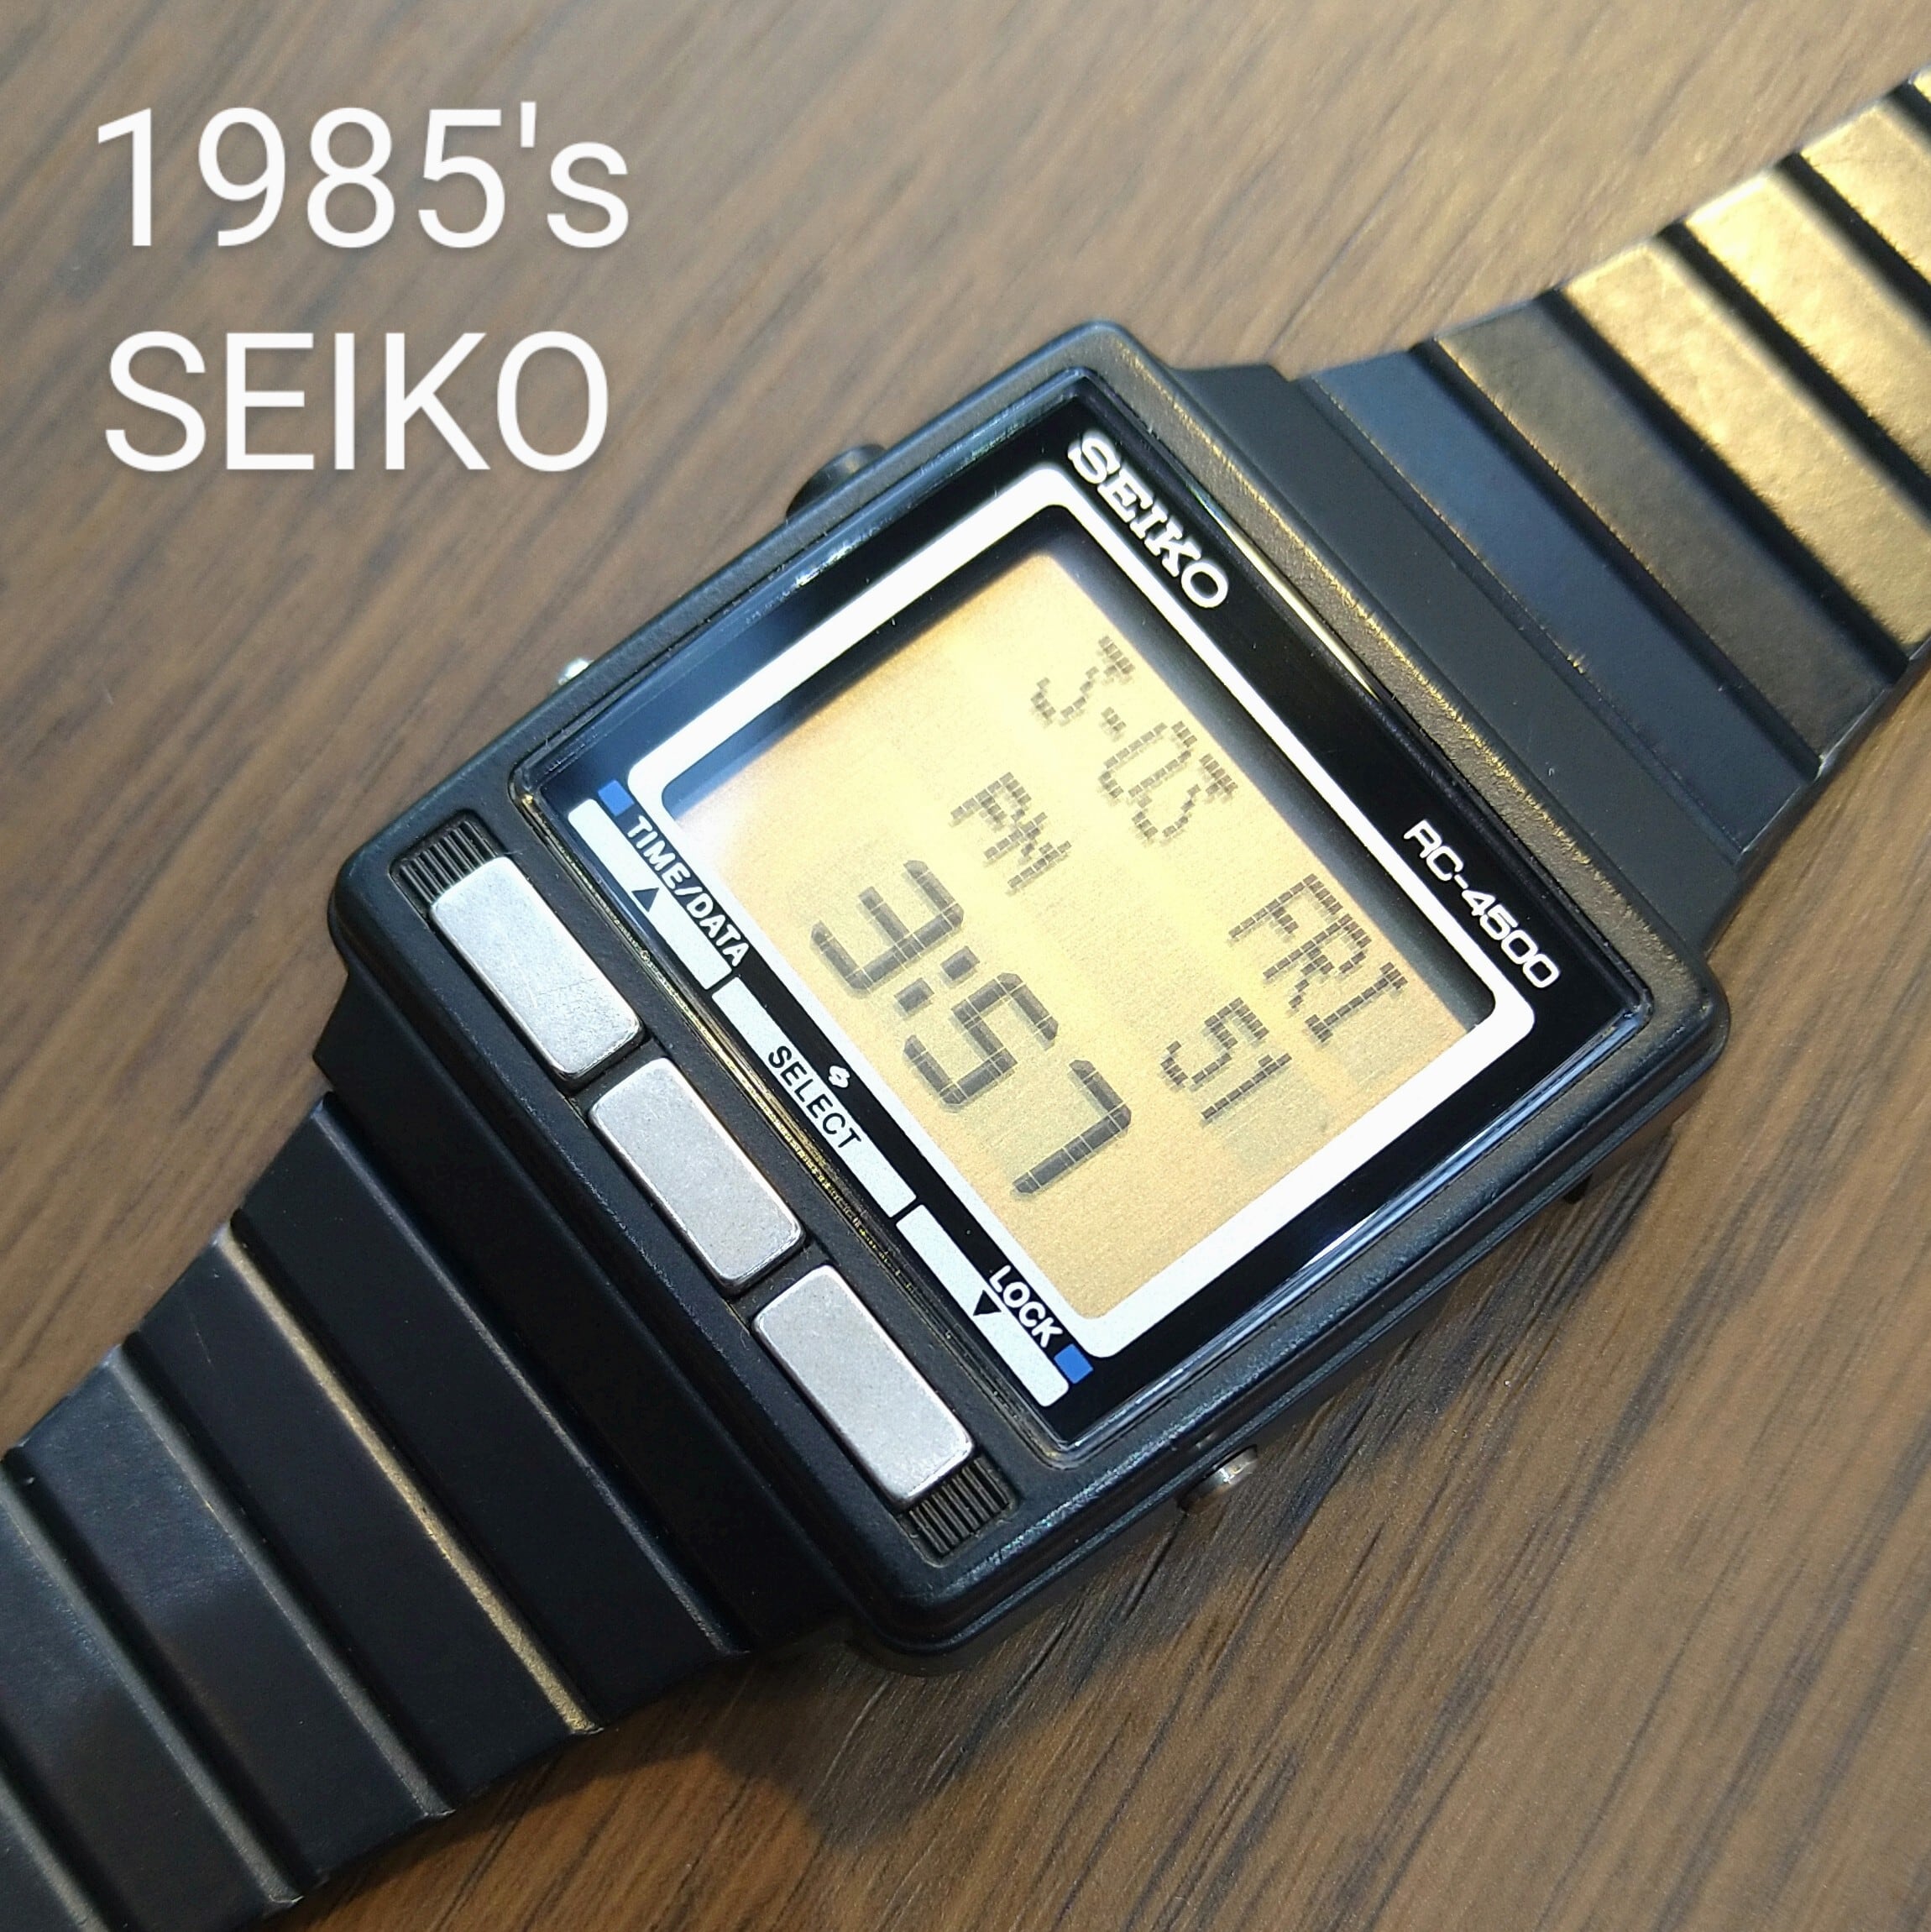 SEIKO RC-4500 | watchshop L